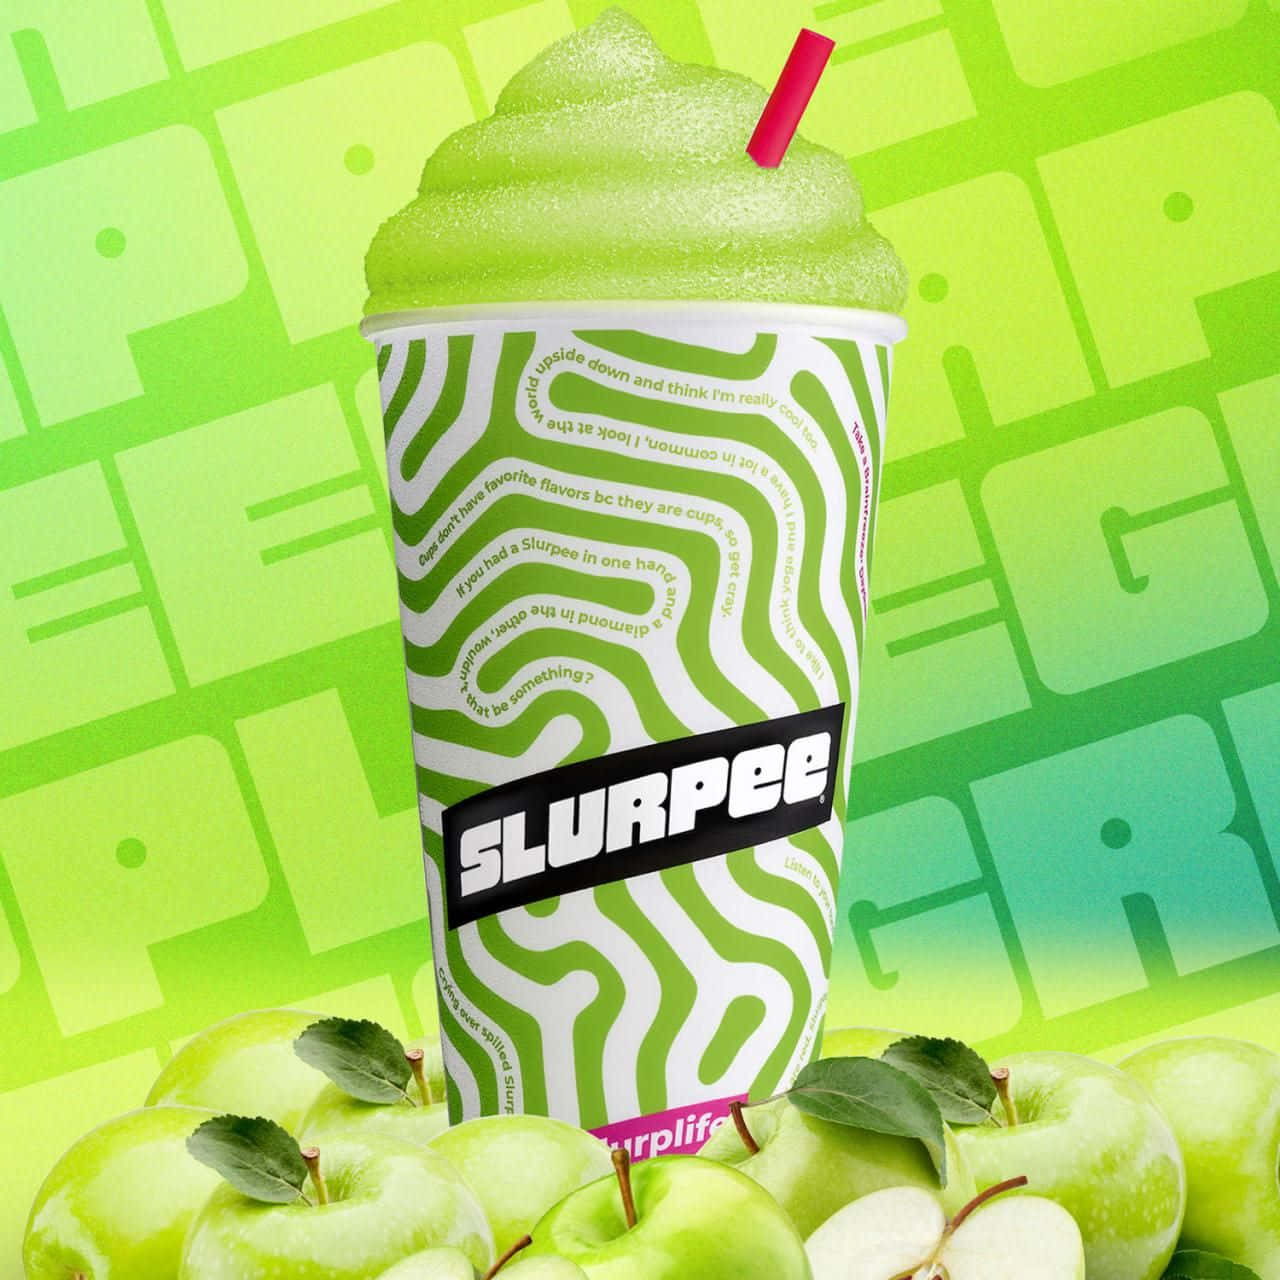 Green Apple Slurpee Cup Wallpaper